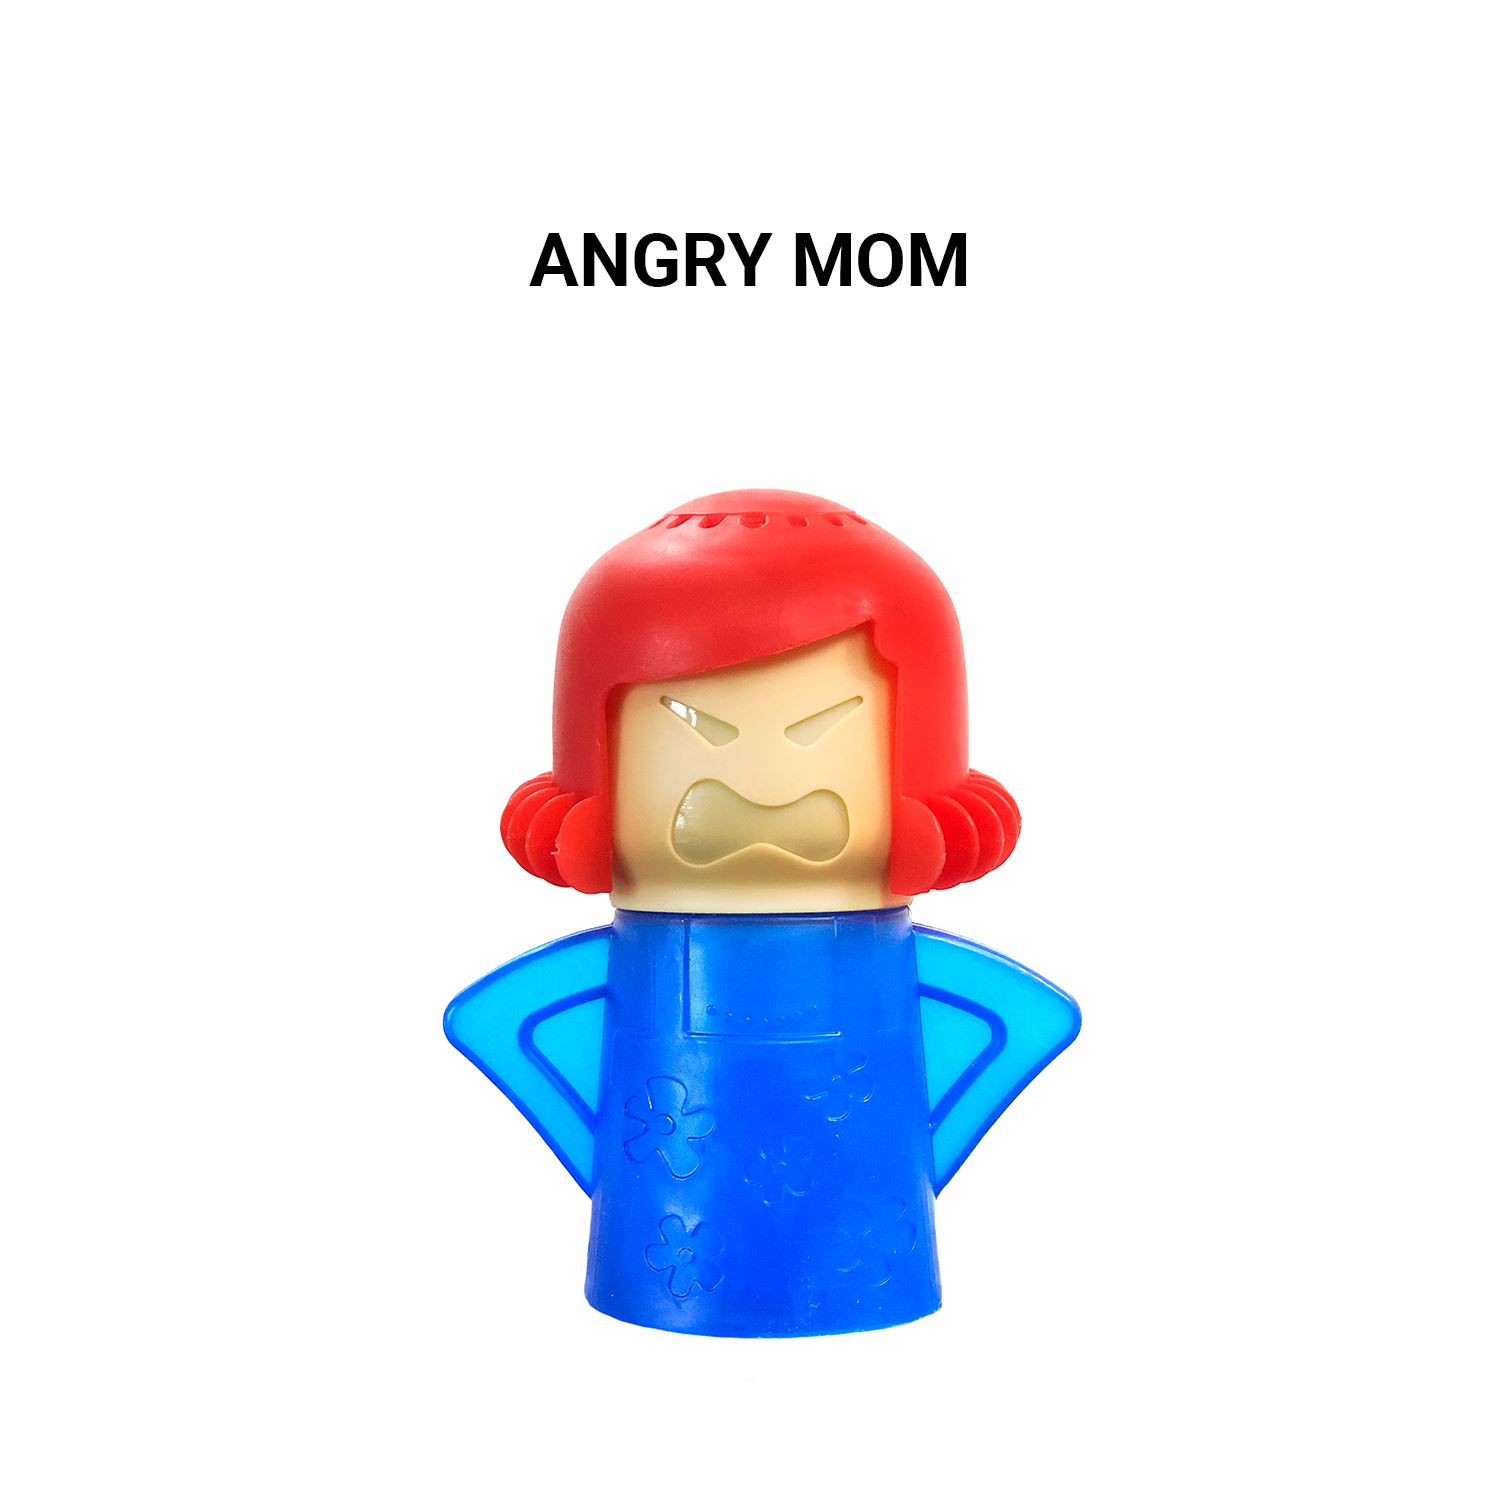 Limpiador Microondas Vapor Mama Enojada Limpieza Angry Mama